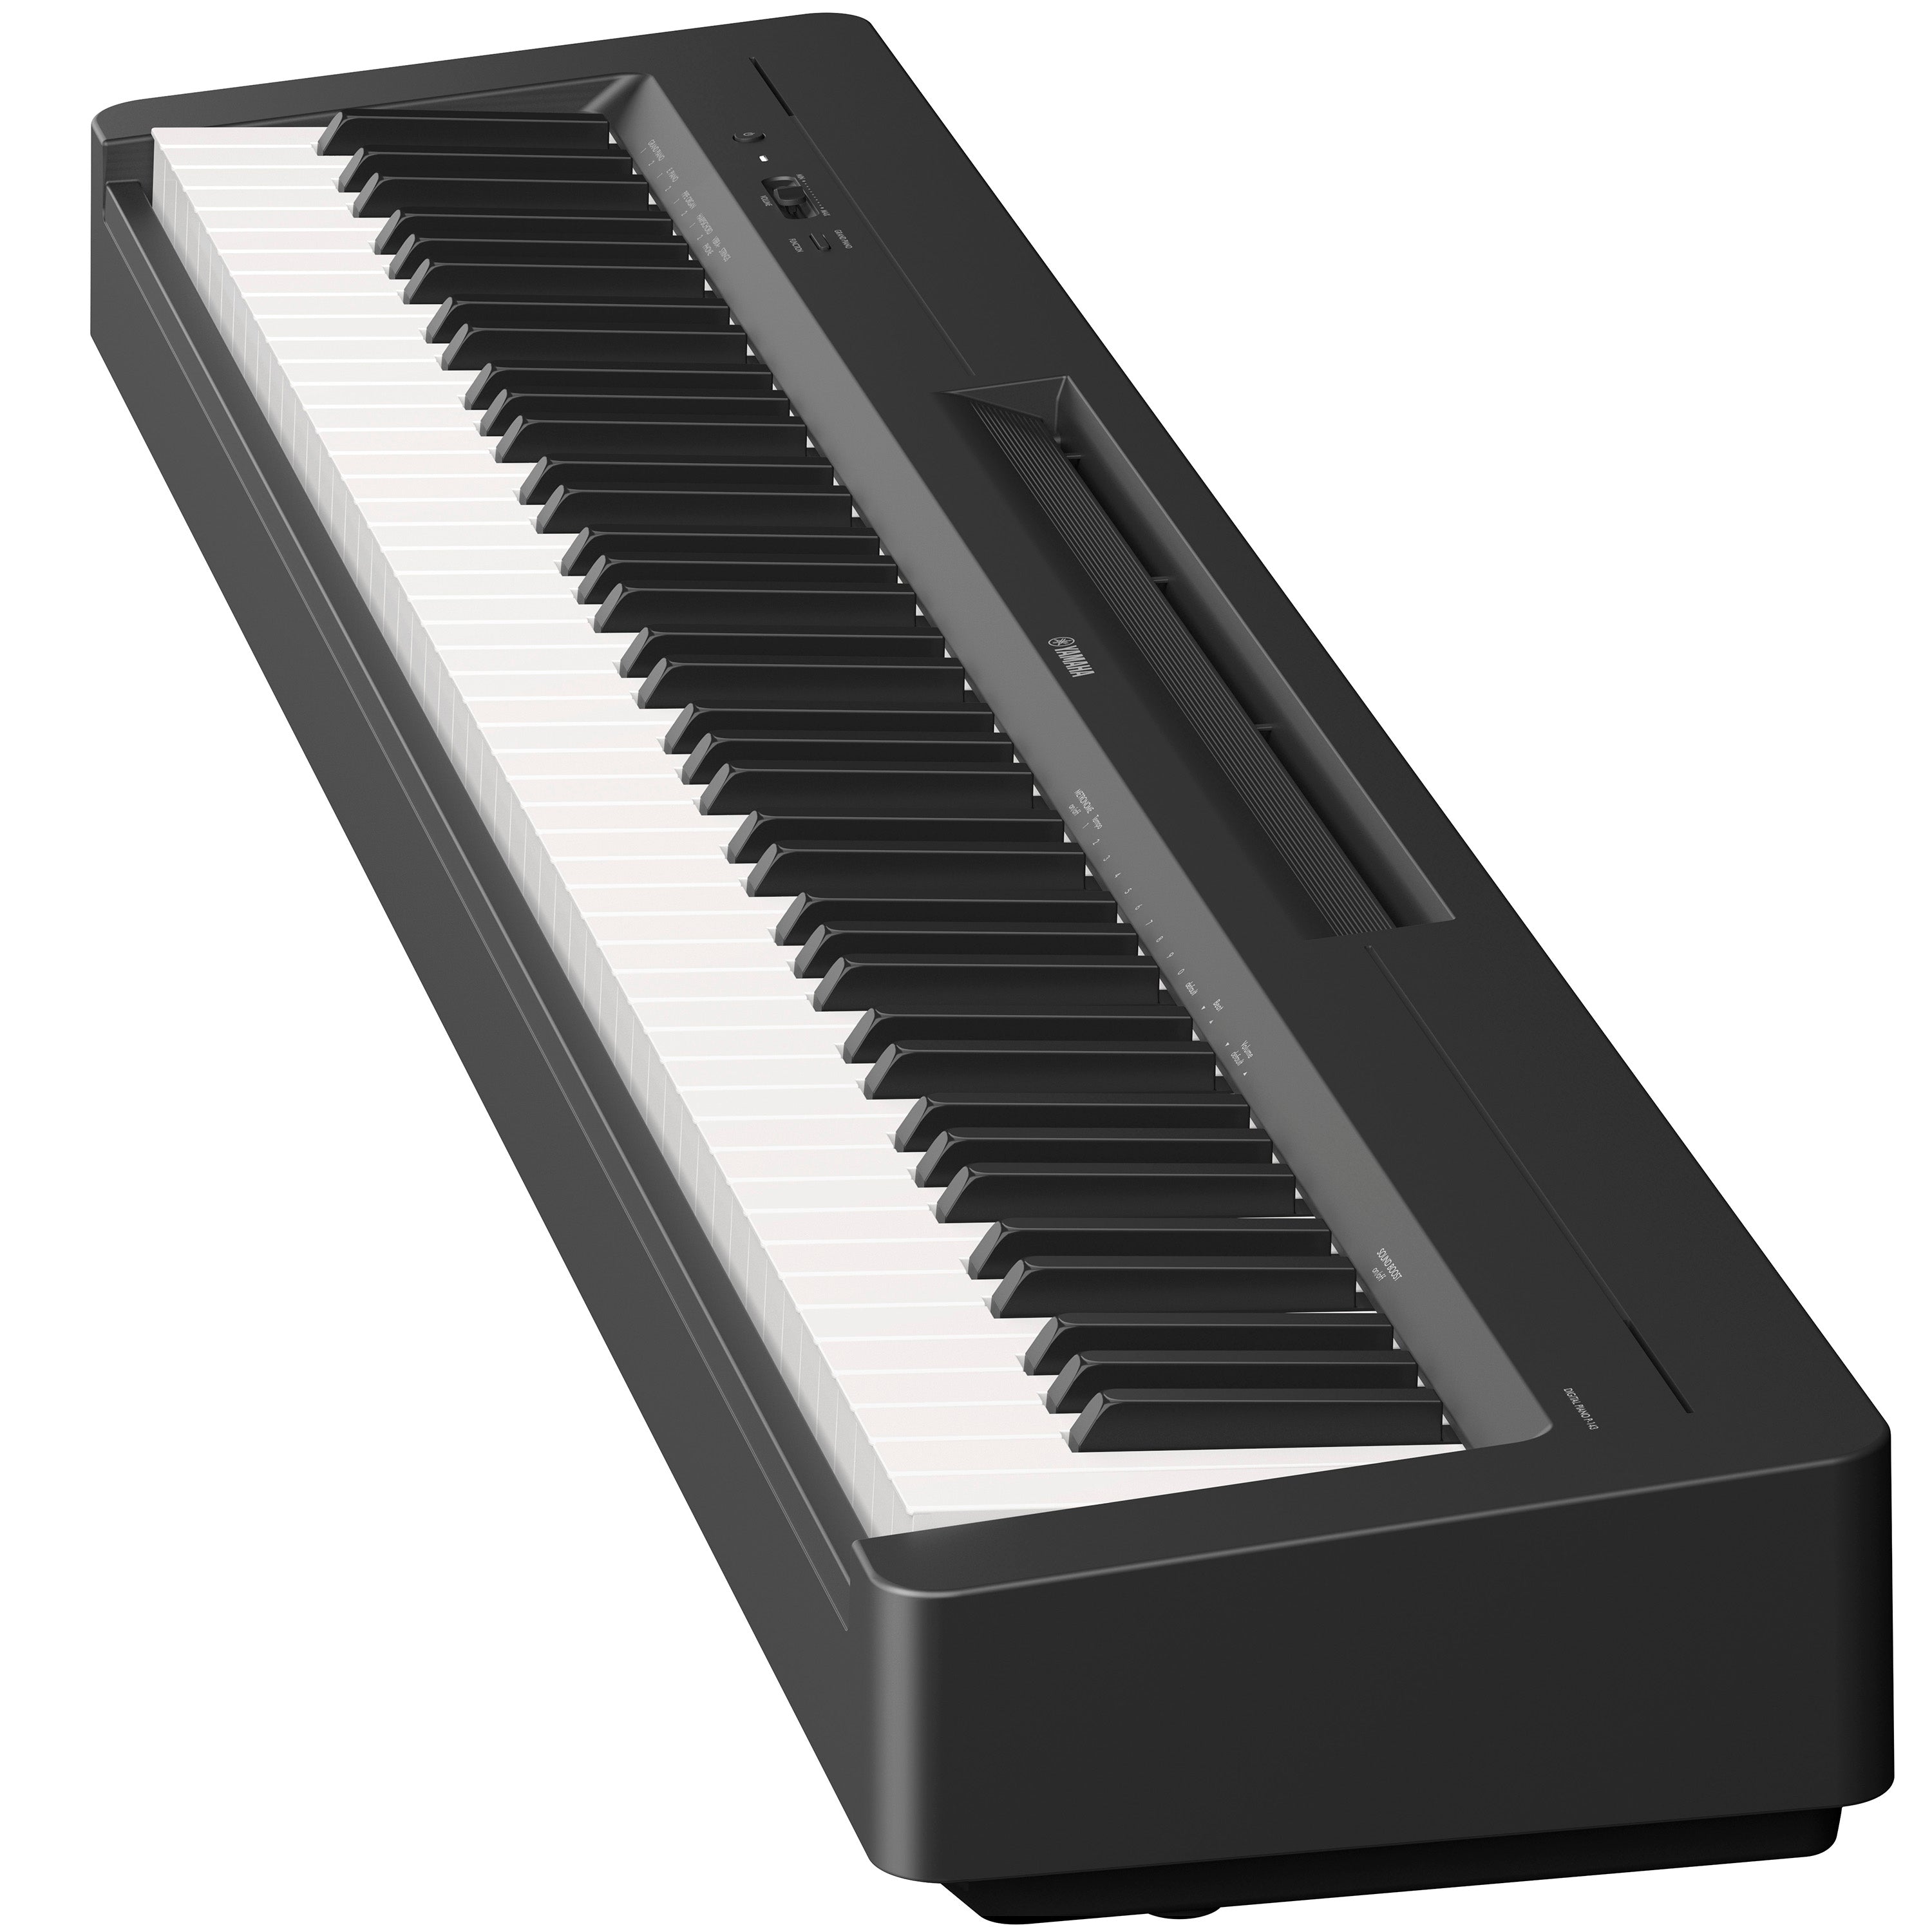 Yamaha P-143 Digital Piano - Black, View 5